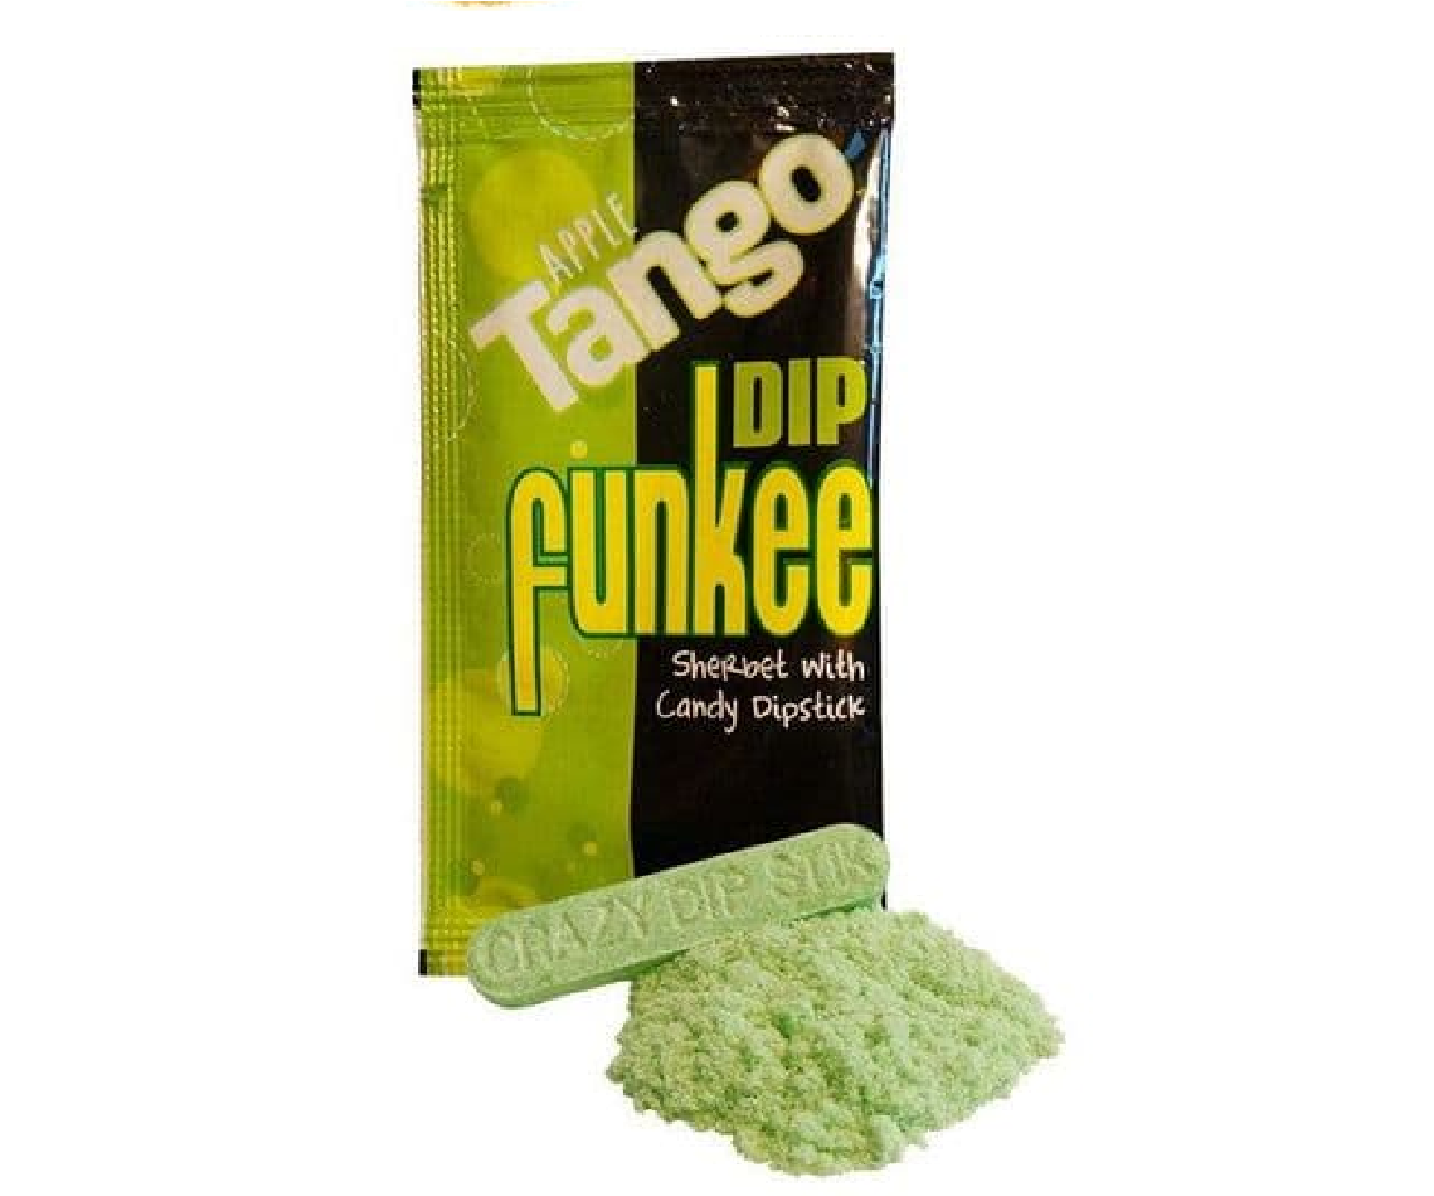 Tango Funkee Dip Sherbert with Candy Dipstick - 15g Apple